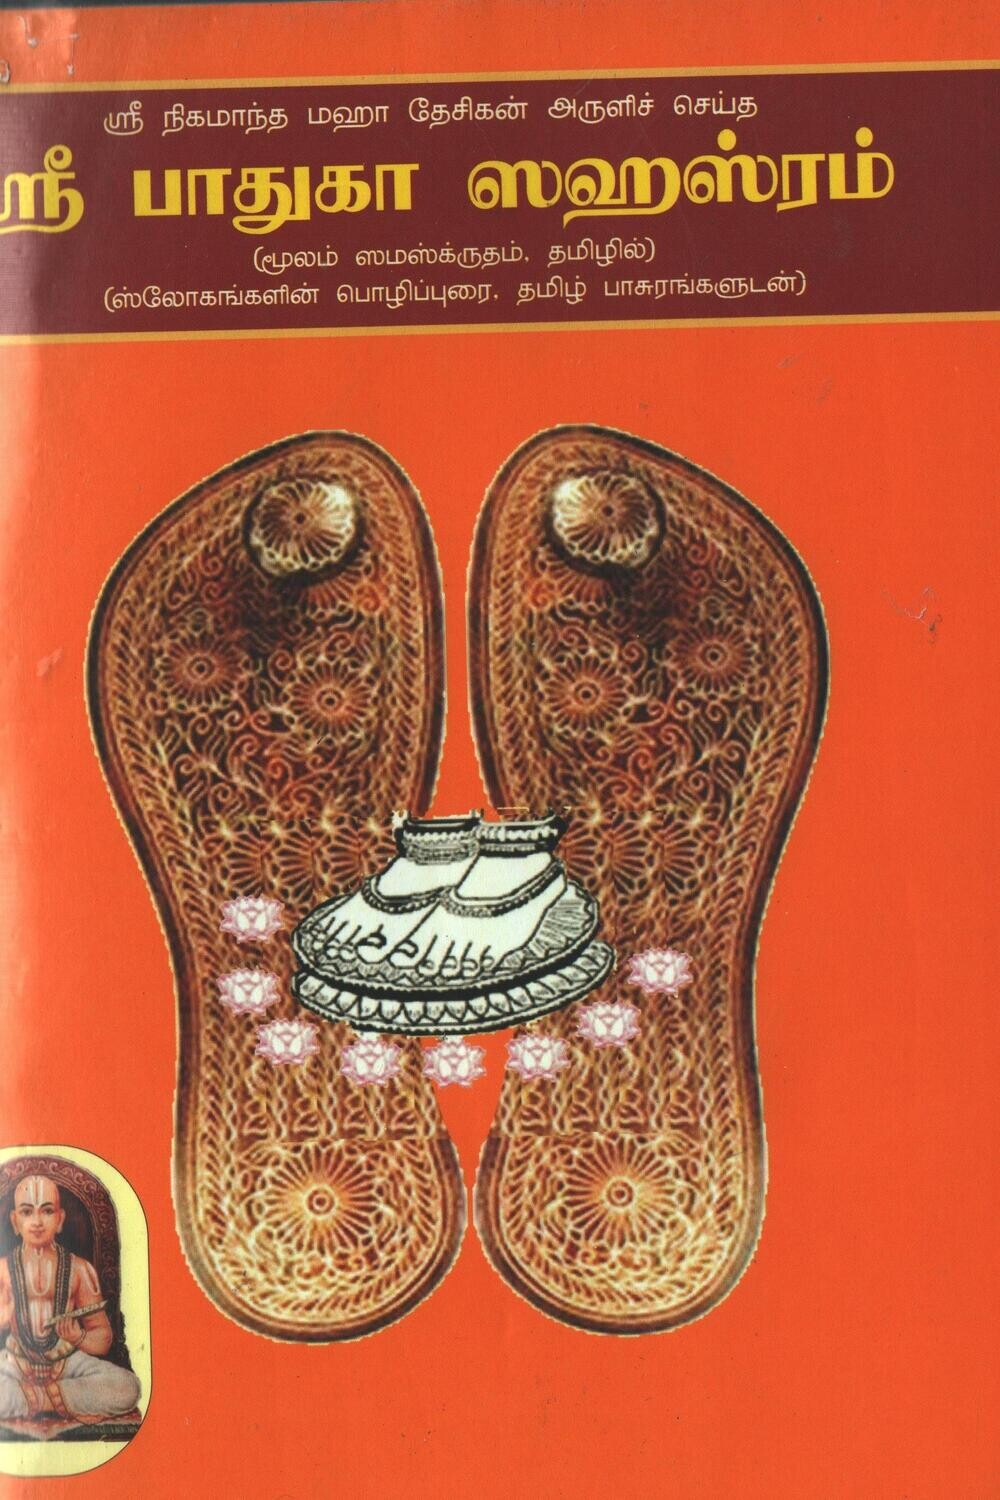 Printed Book - Padhuka / Paduka sahasram with meaning, Bhagavan Nama publications ; பாதுகா சஹஸ்ரம் உரை - பகவன் நாமா பதிப்பகம்.